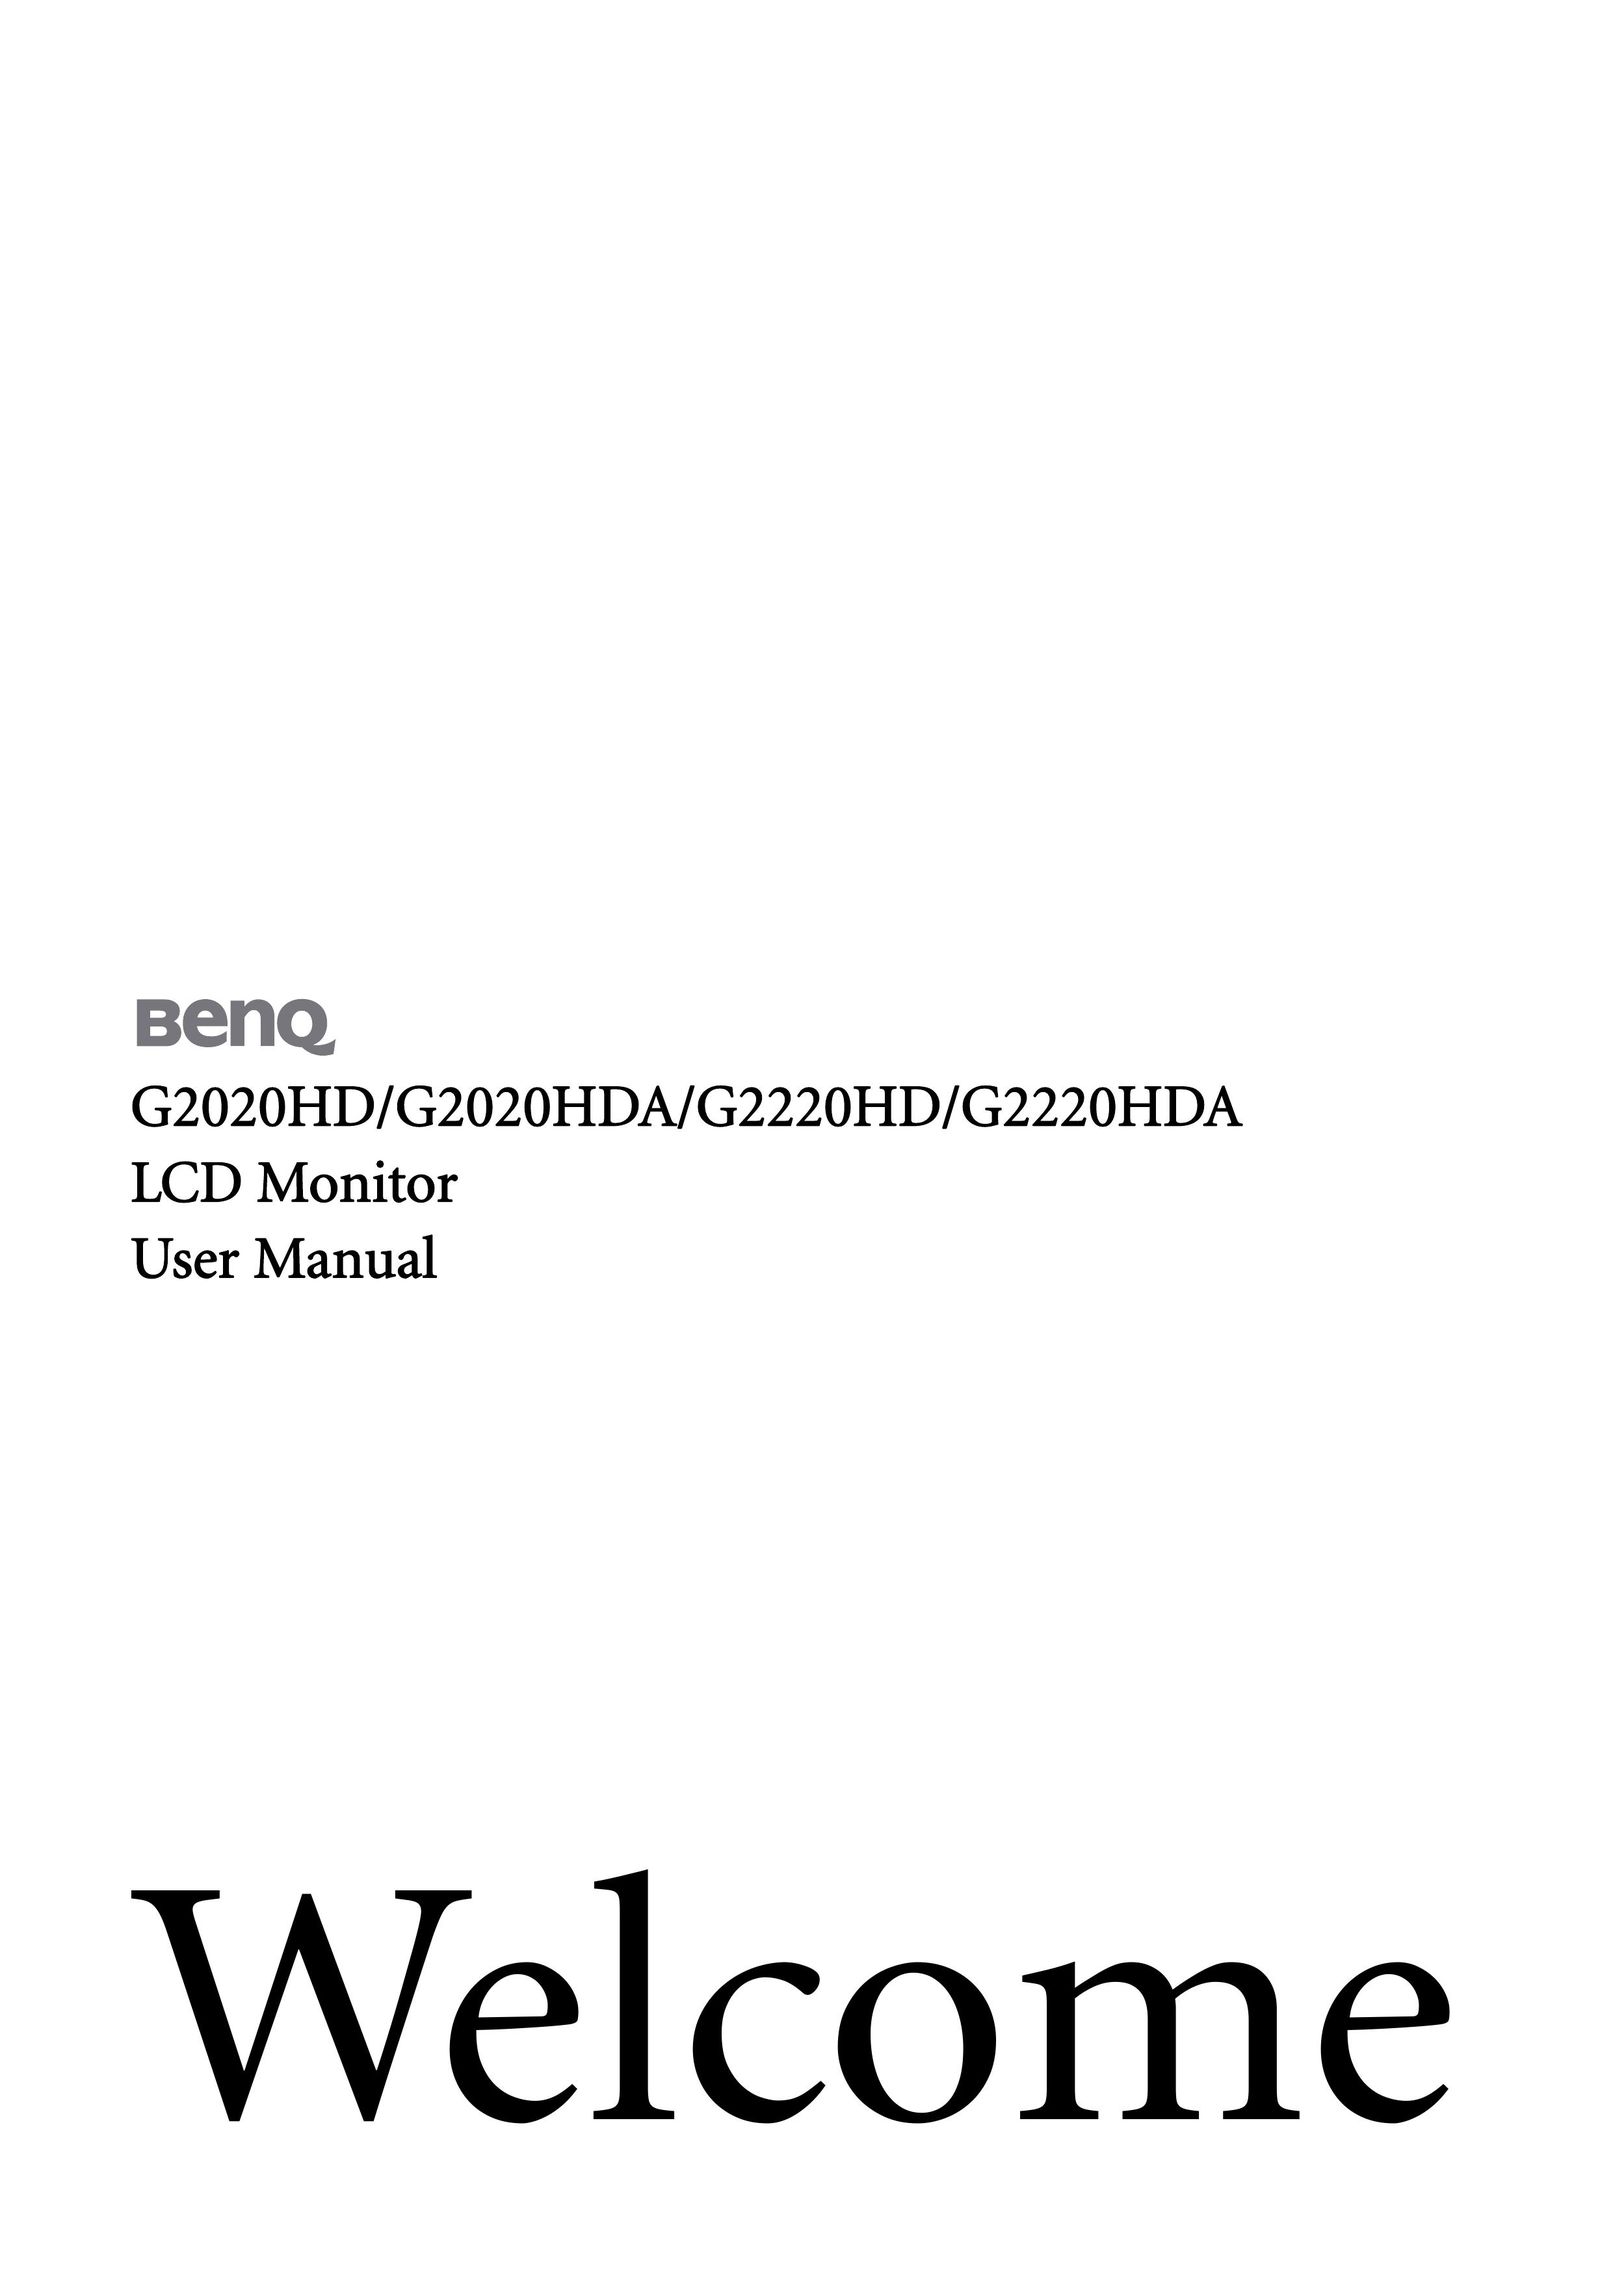 BenQ G2220HDA Computer Monitor User Manual